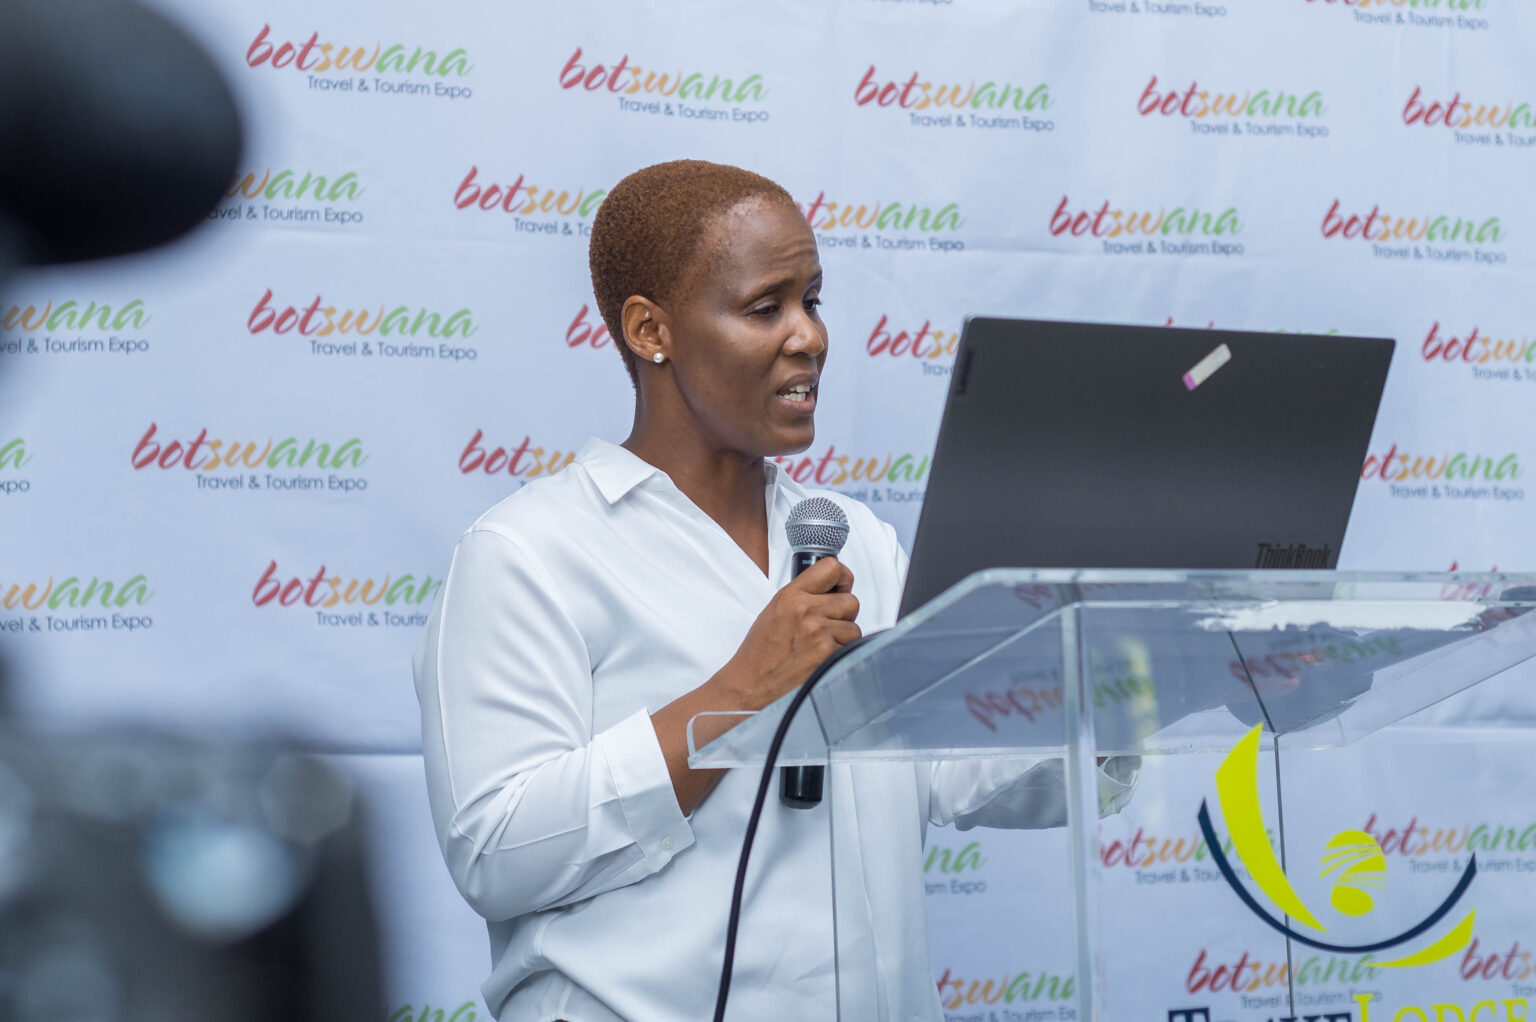 botswana travel and tourism expo 2022